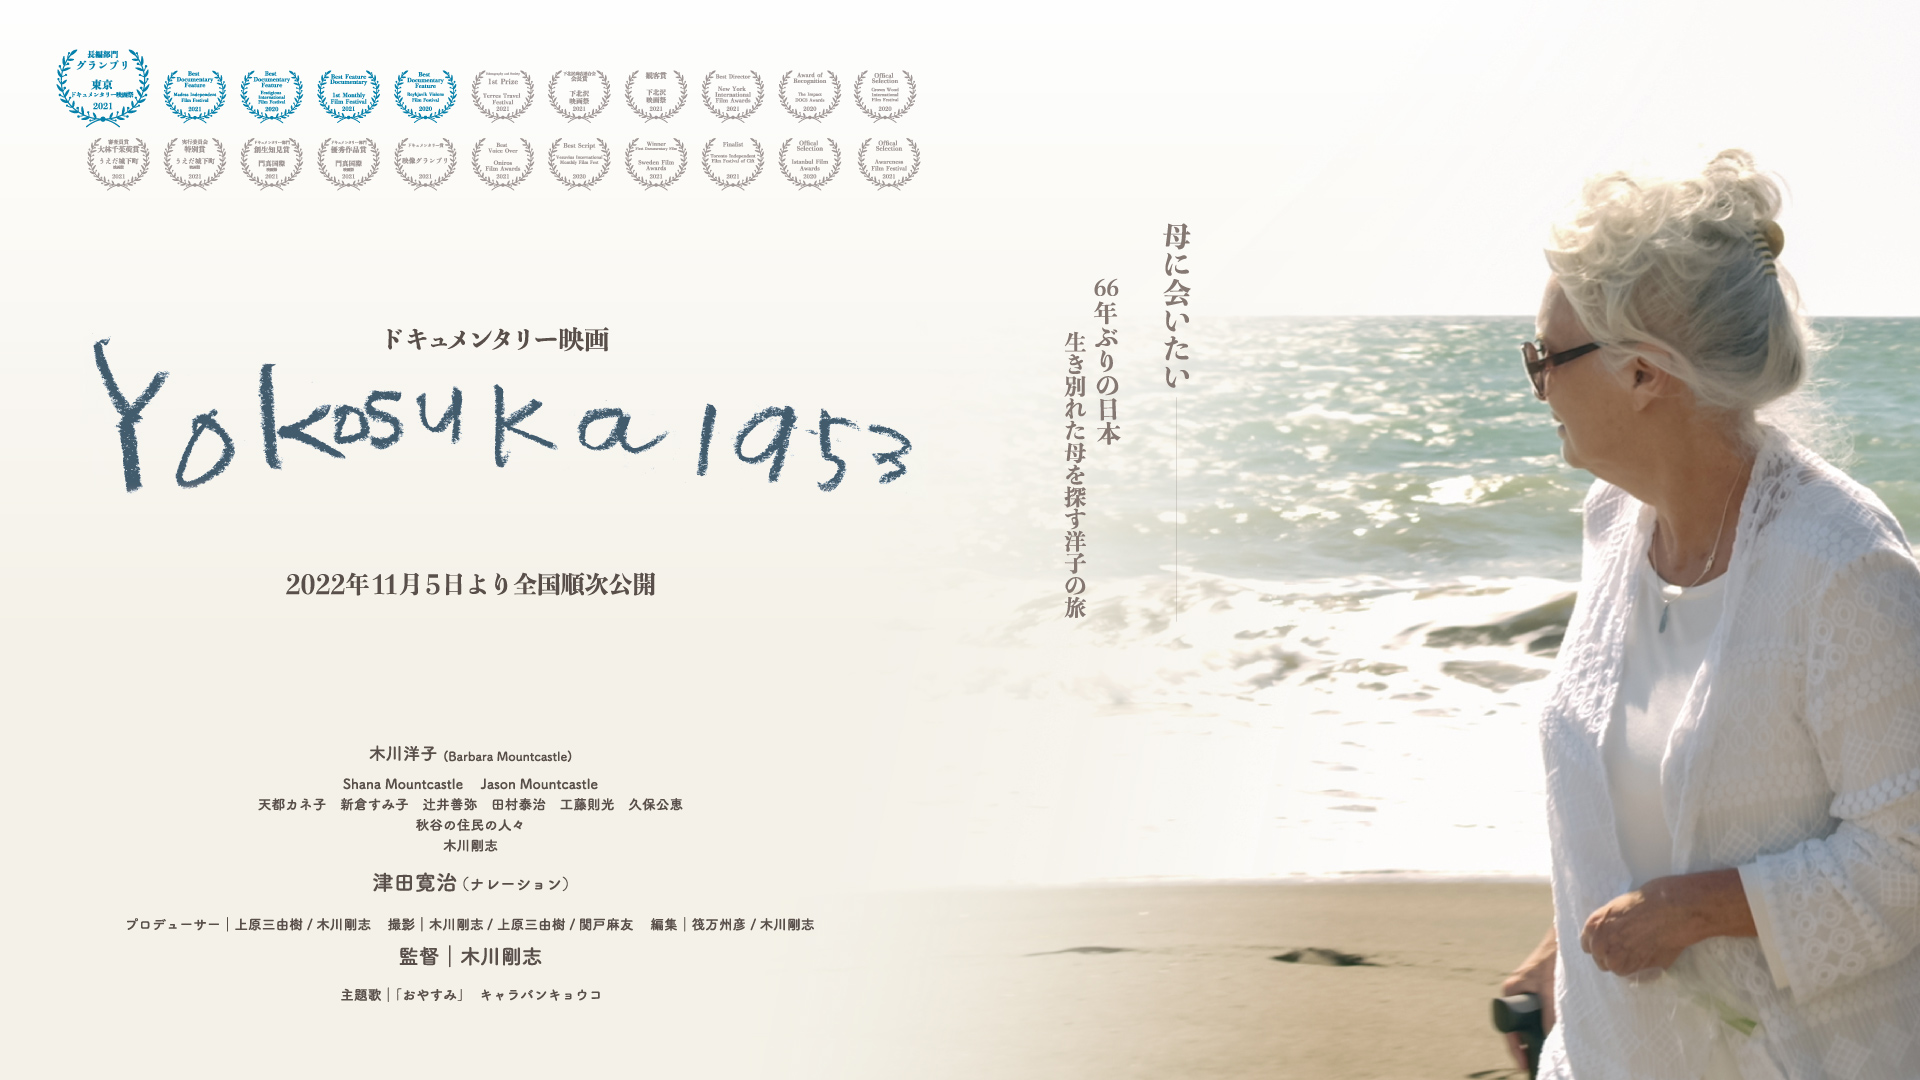 Yokosuka1953 – a documentary